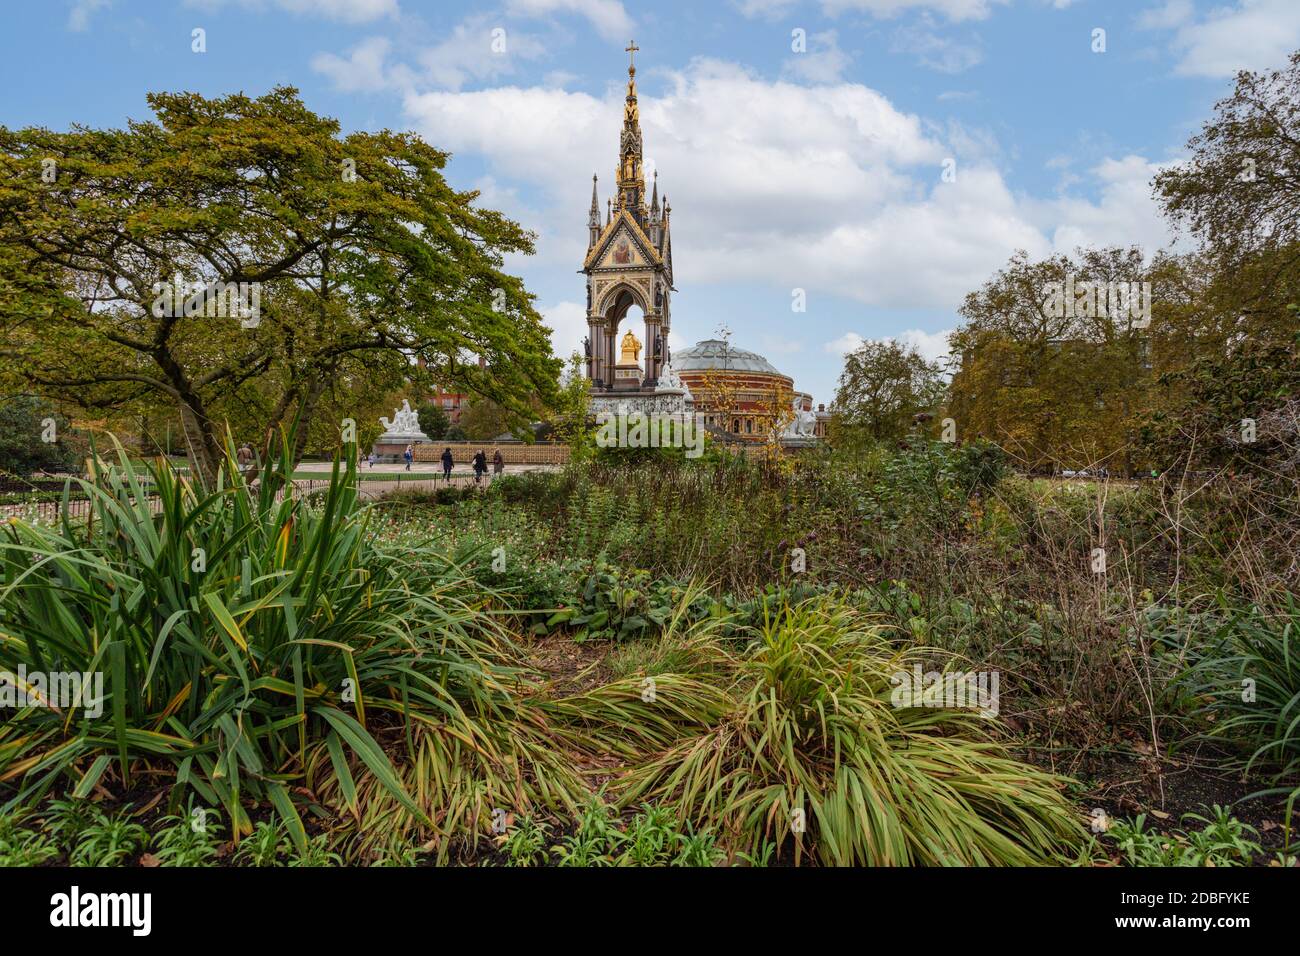 A view of The Albert Memorial taken inside Kensington Gardens, London. Photographed in Autumn. Stock Photo